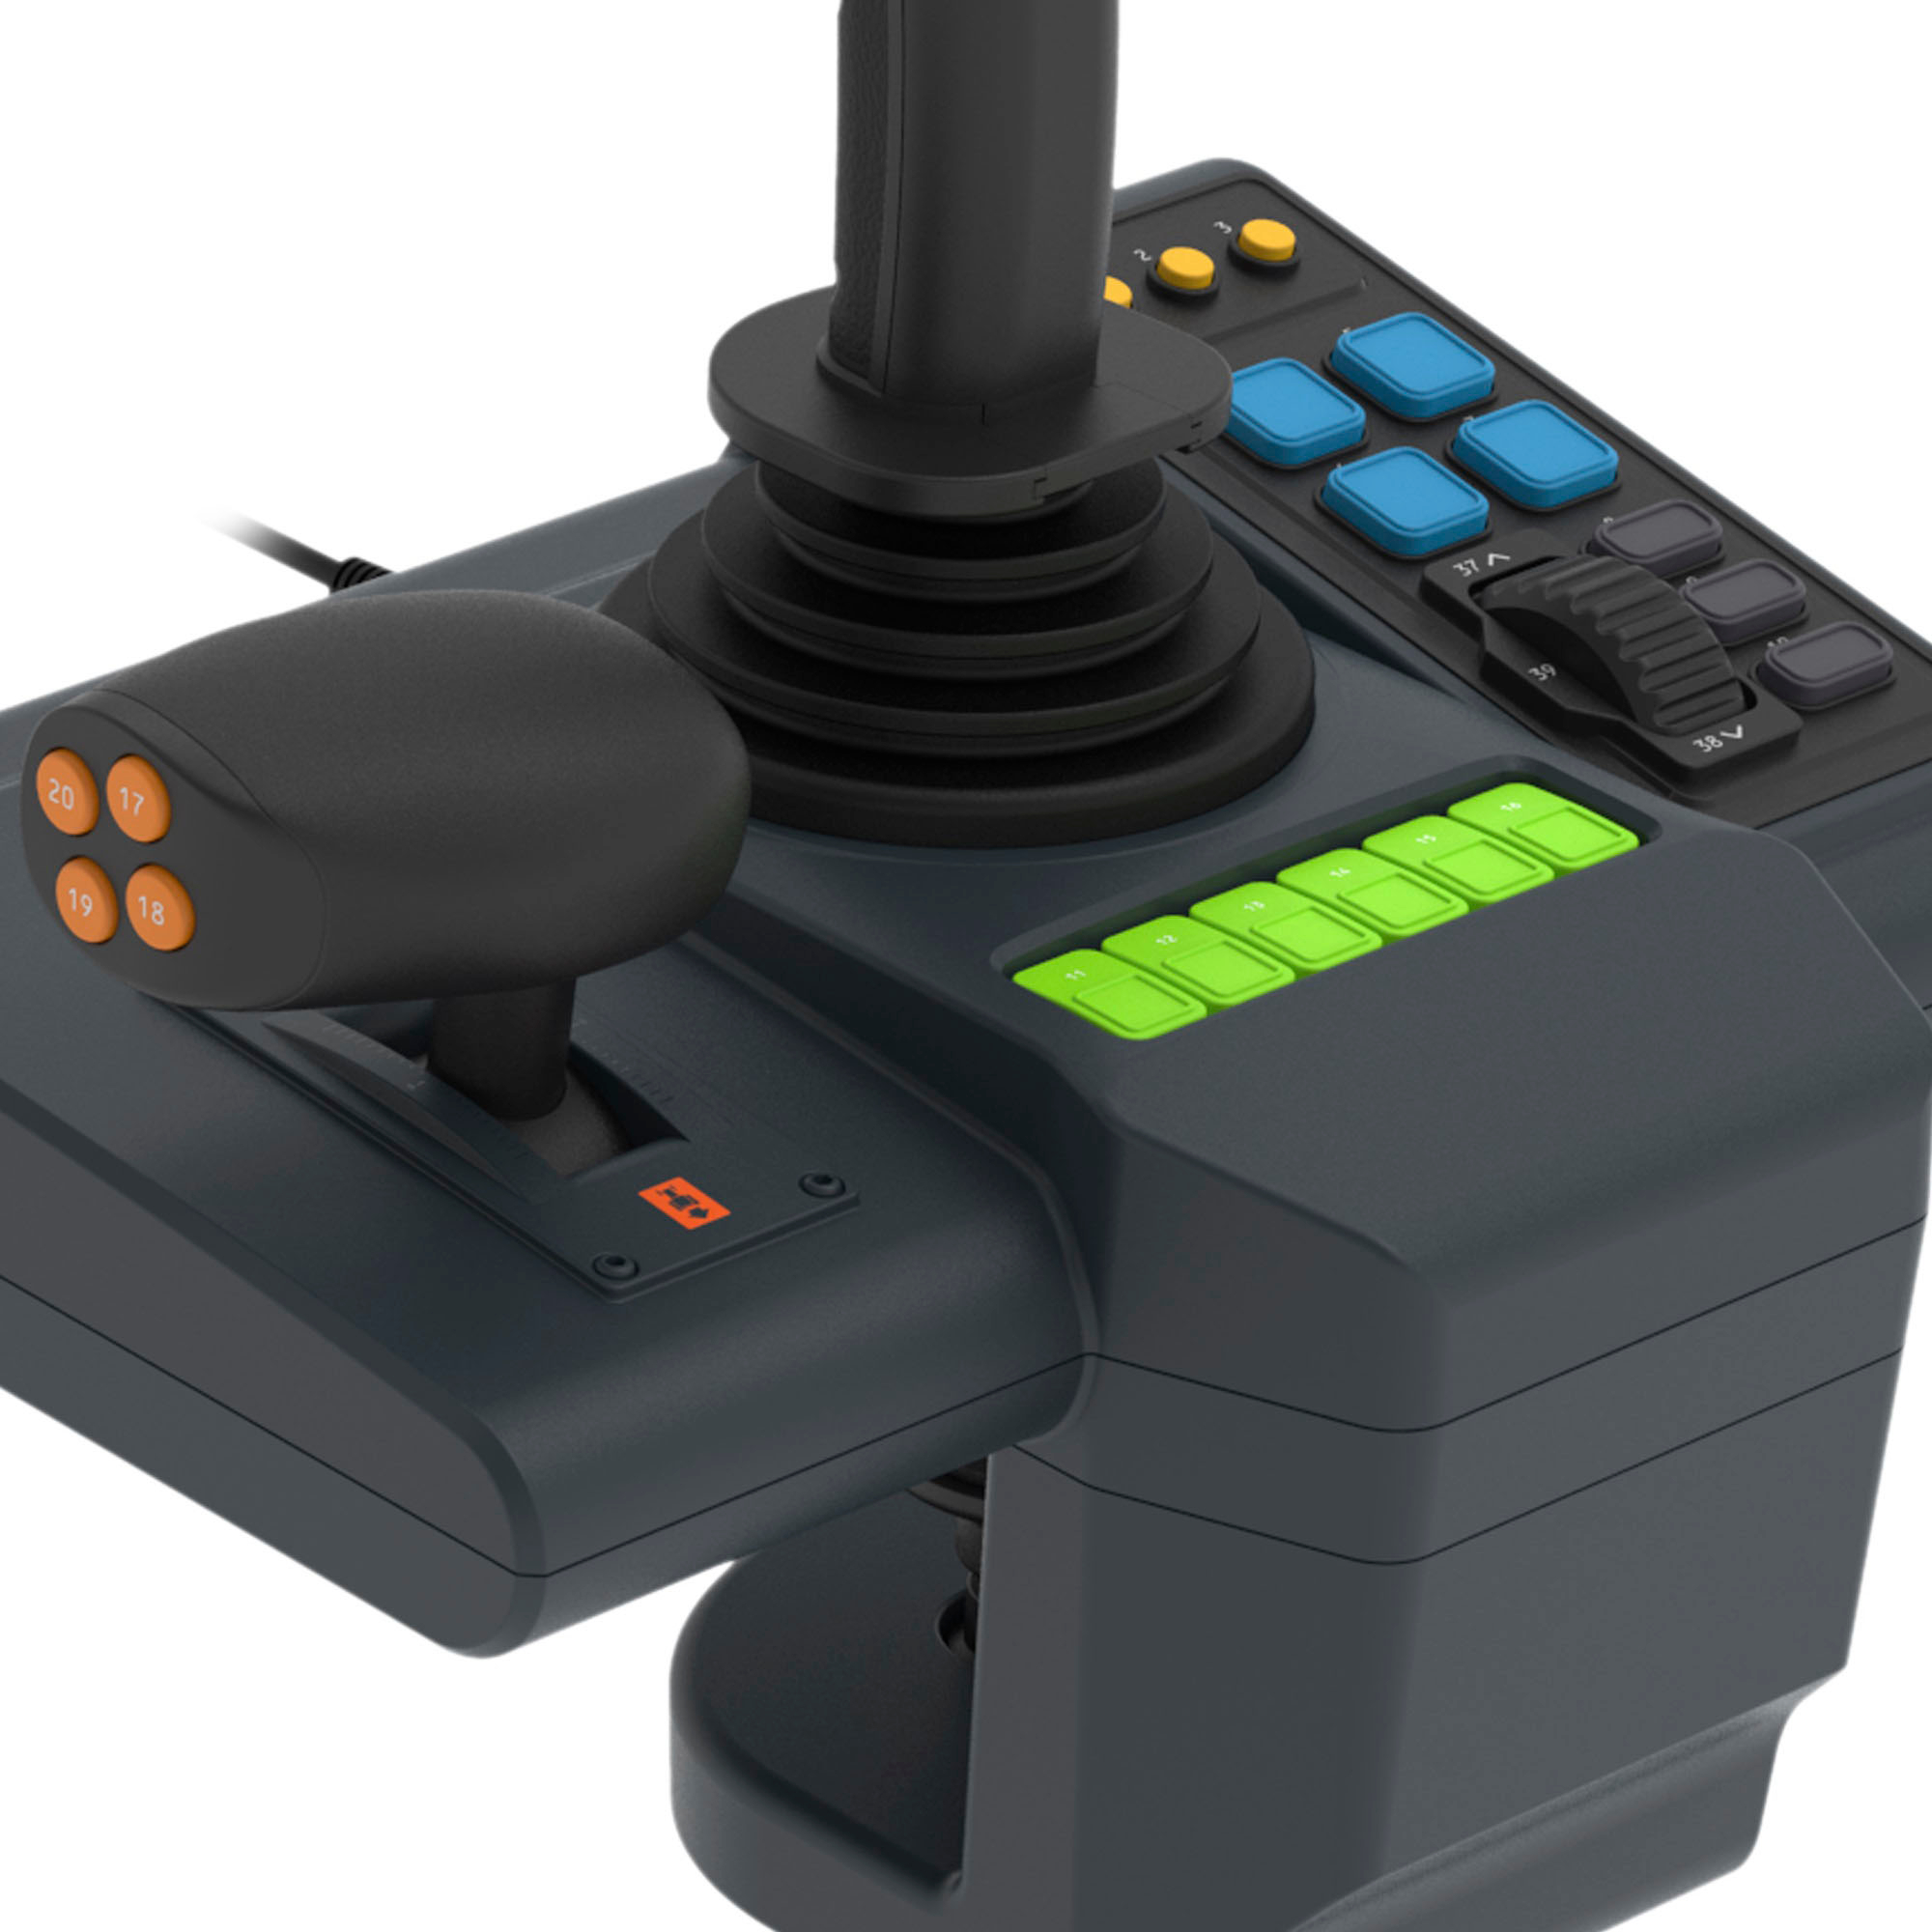 The Saitek steering wheel compatible with Farming Simulator 19